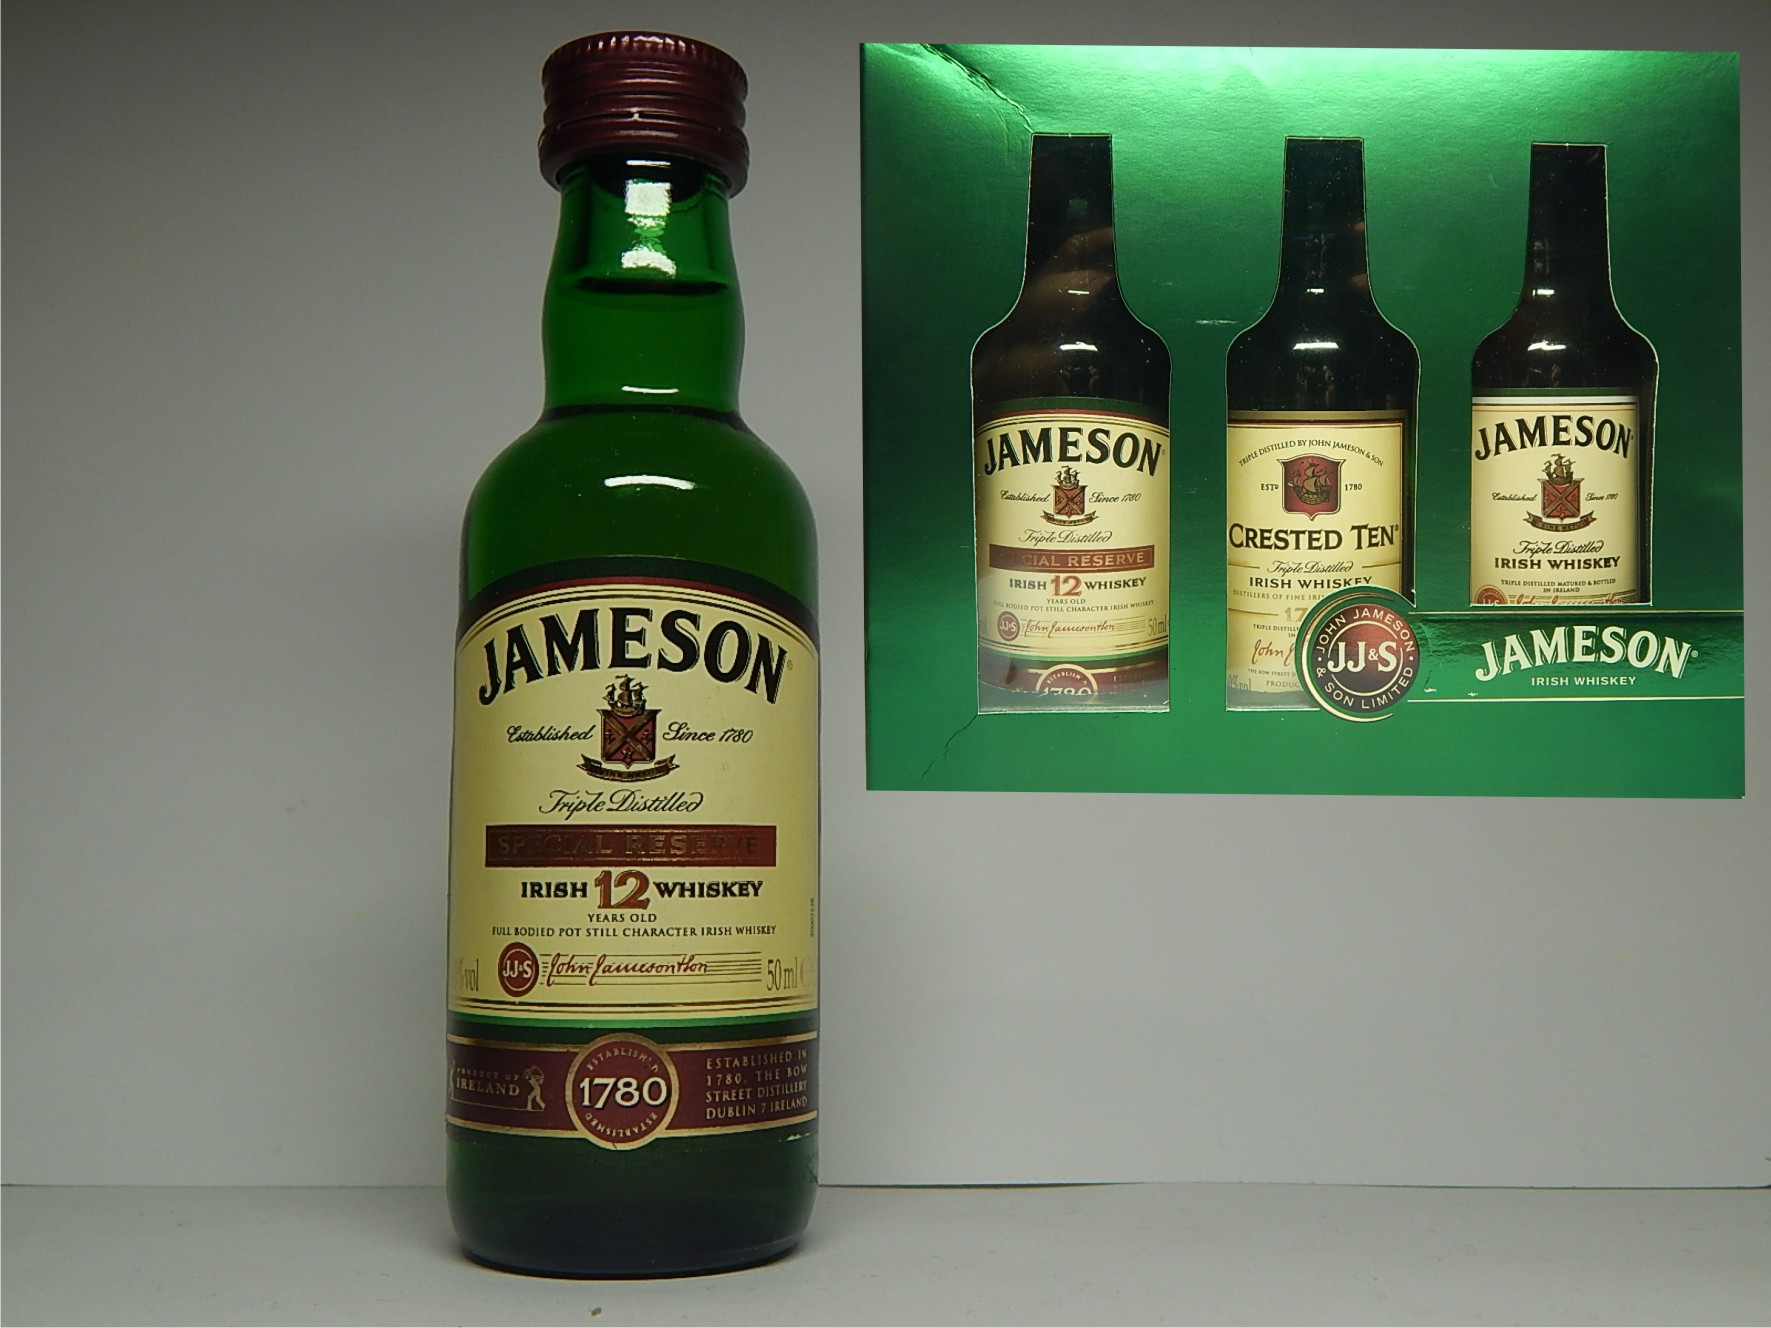 Triple Distilled Special Reserve12yo Irish Whiskey